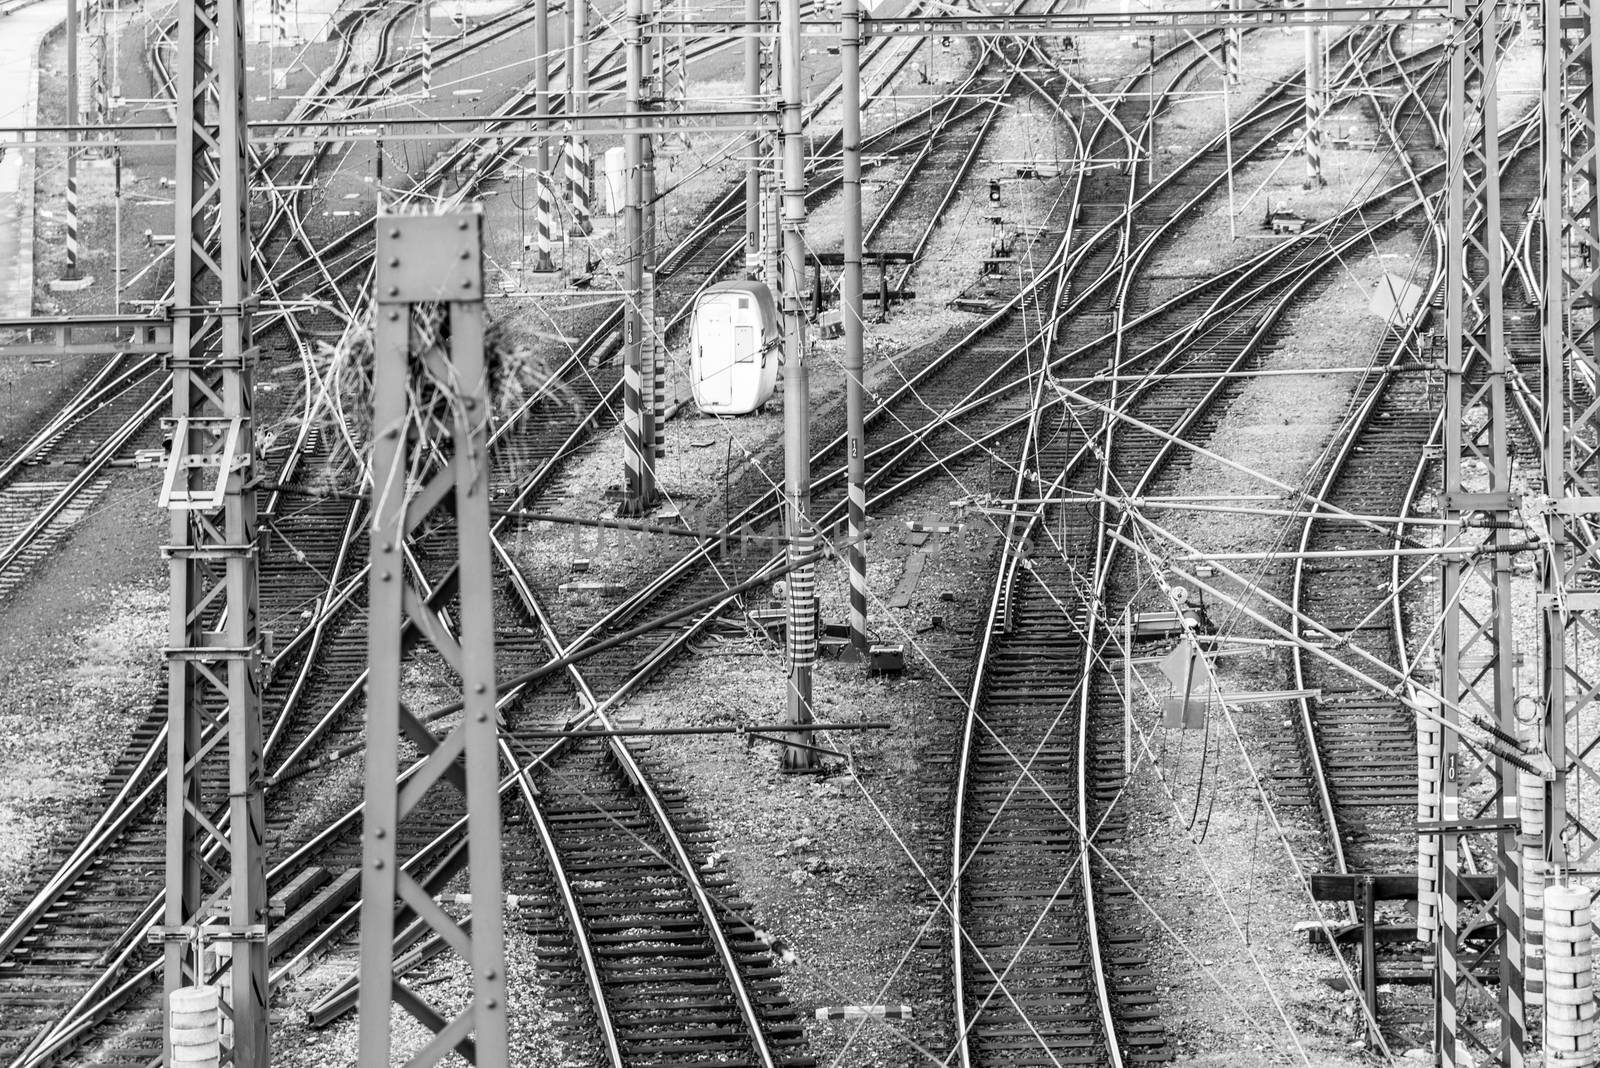 Railroad tangle at large train station. Railway transportation theme. Black and white image.